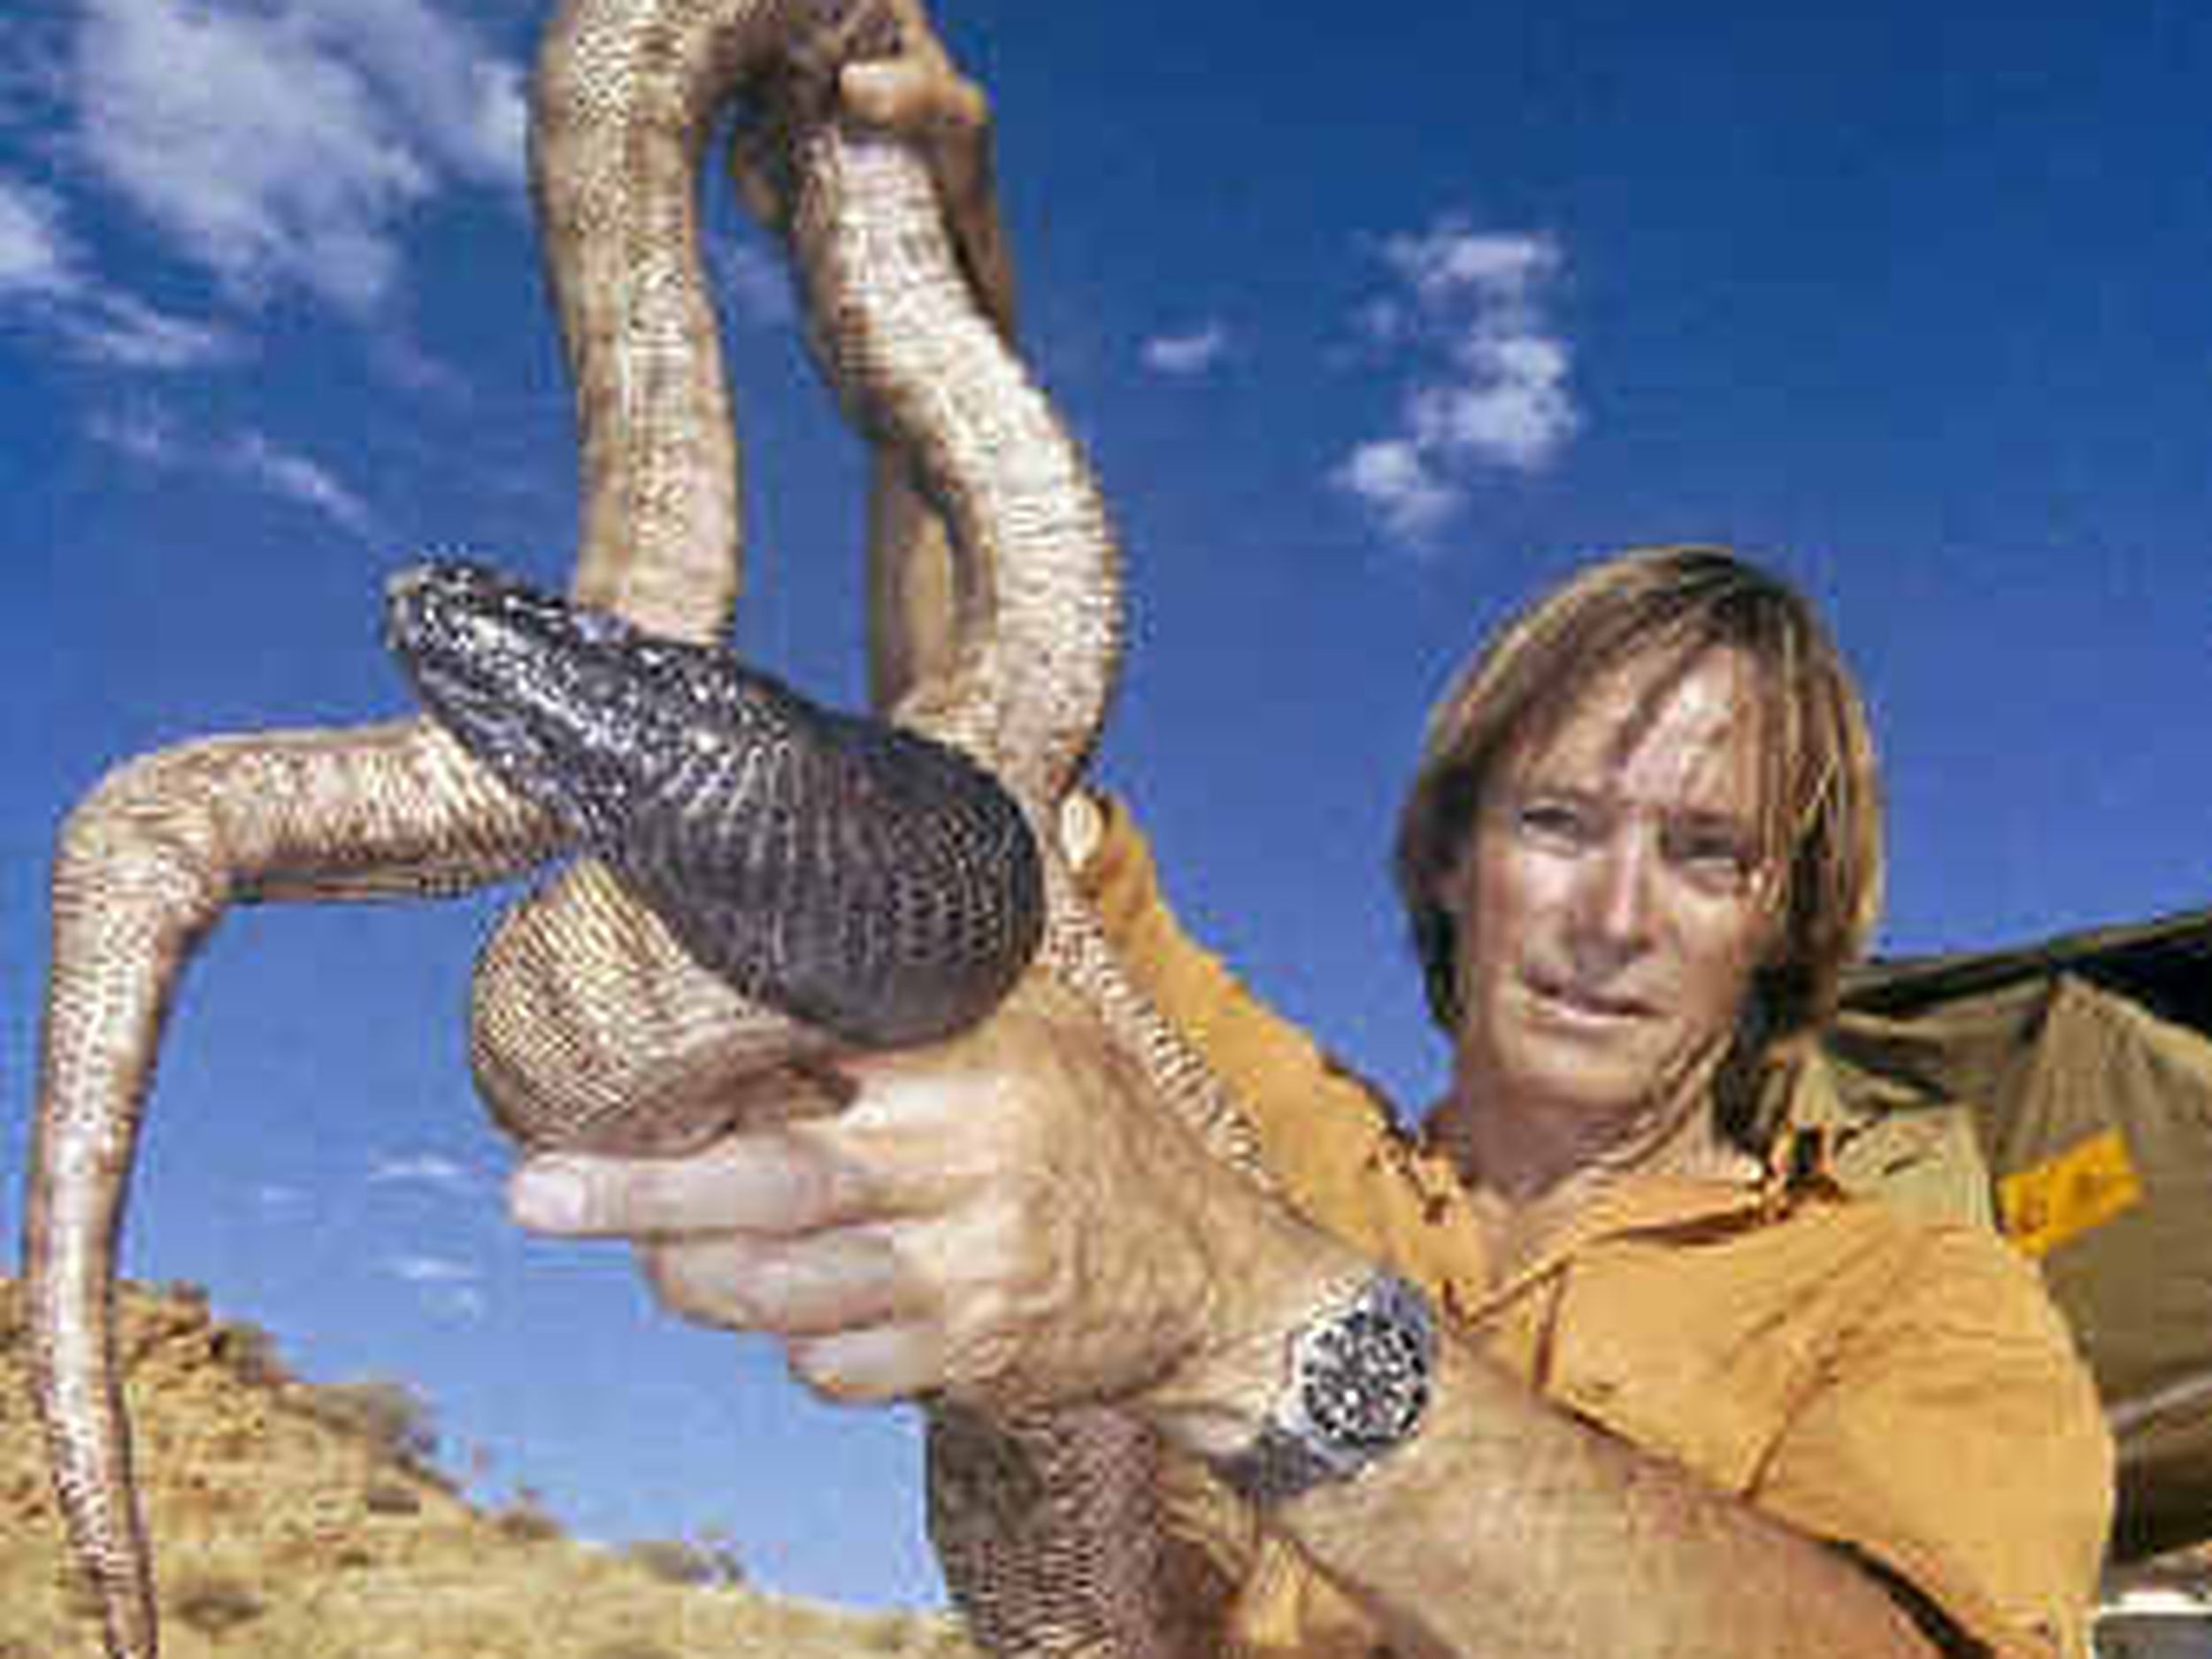 Snakemaster' premieres tonight on Animal Planet | The Spokesman-Review